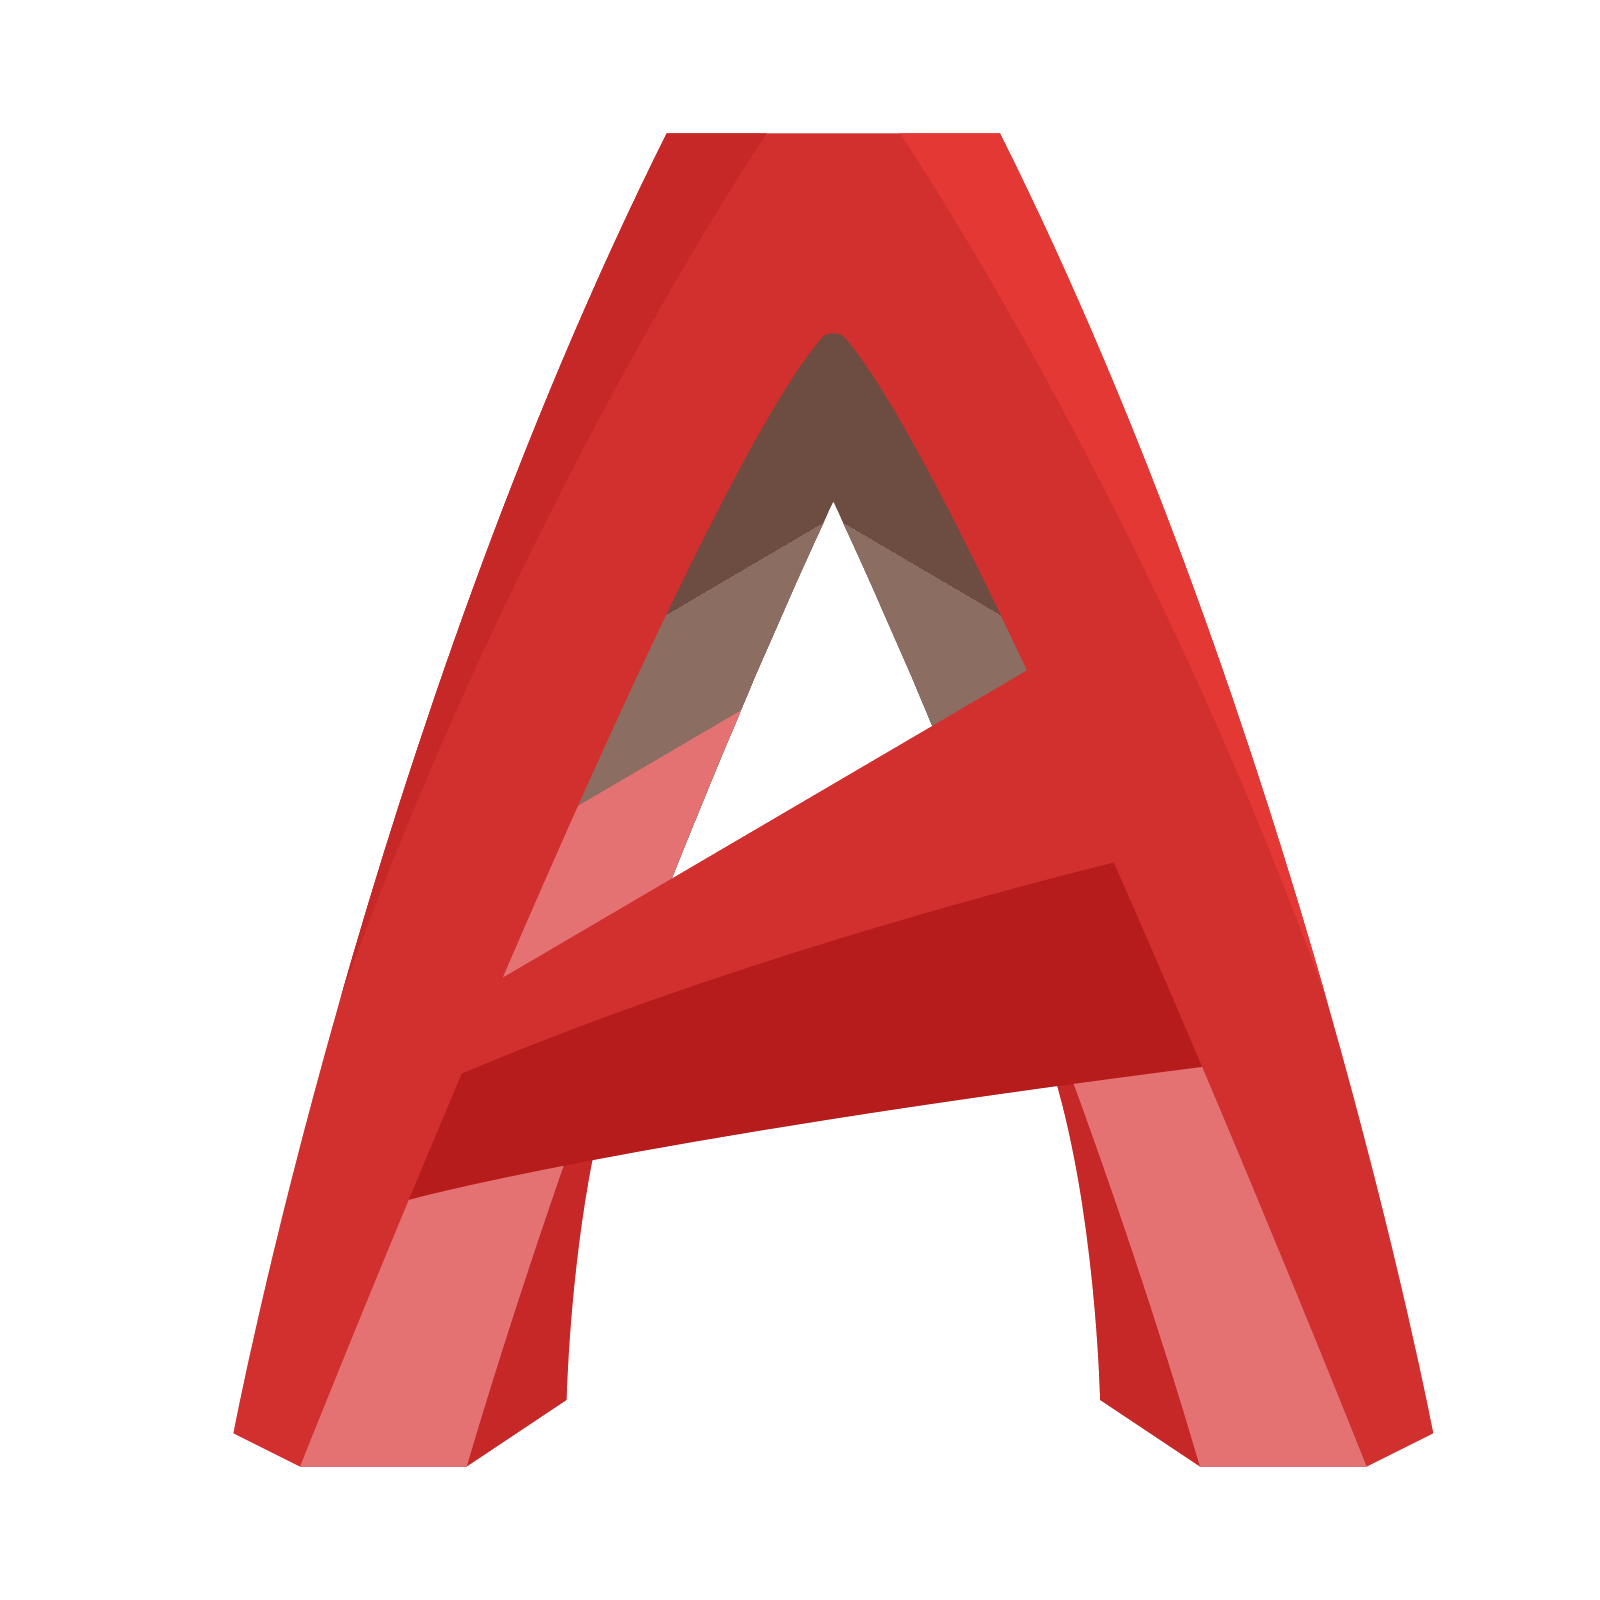 kisspng-autocad-computer-icons-autodesk-logo-adobe-illustr-5cc69fd04dc307.6366244915565209123185.png